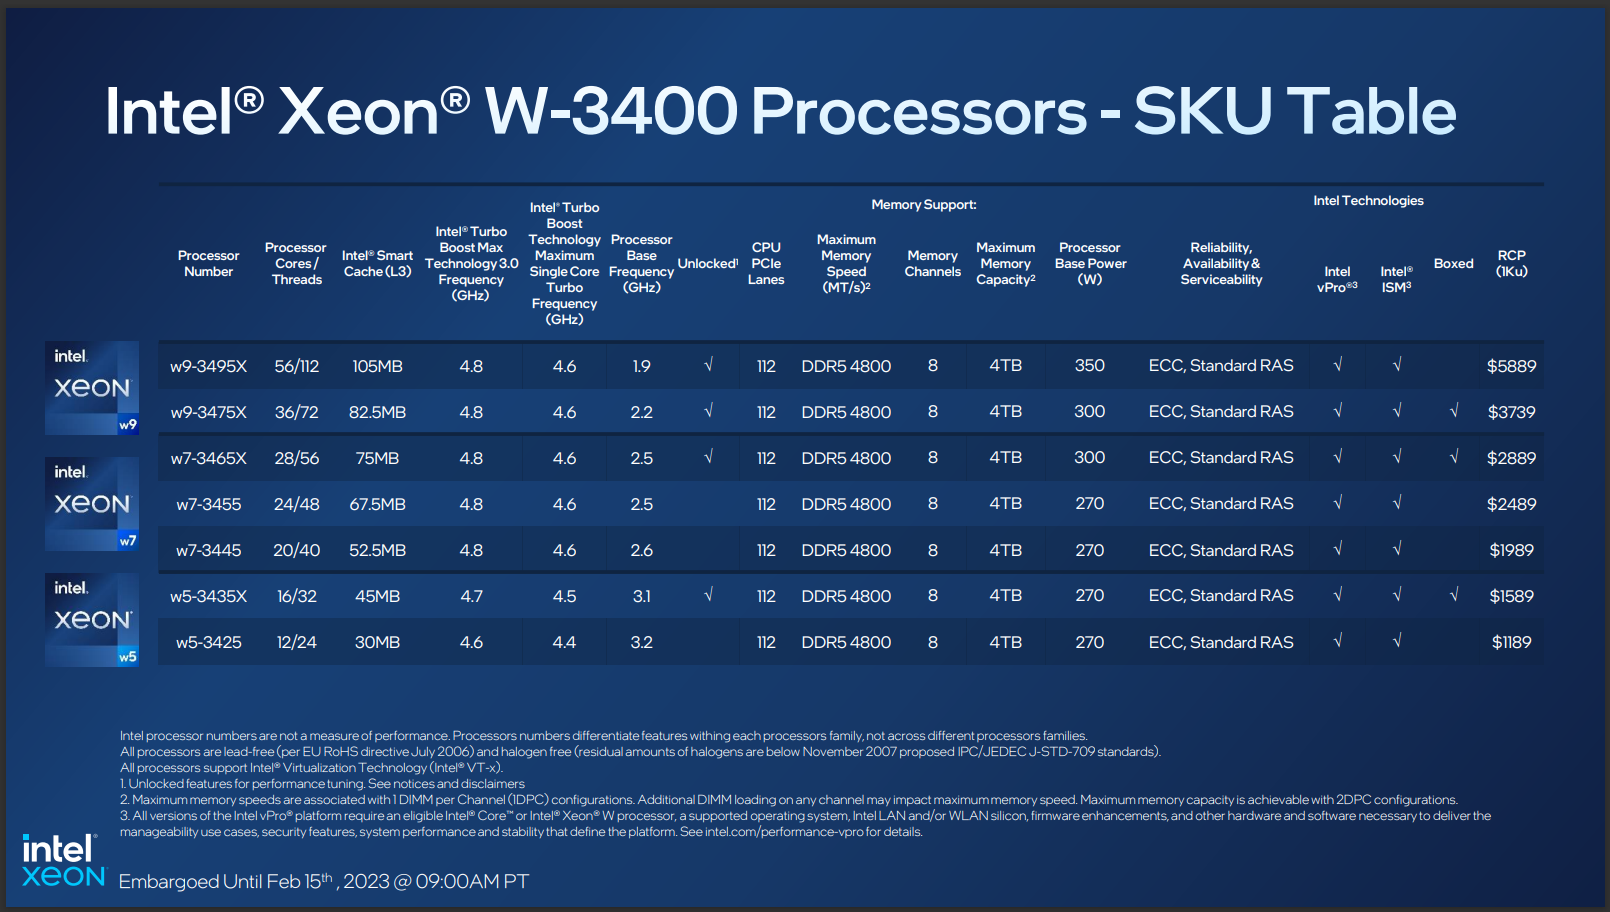 Intel Xeon W-3400 Processor Lineup